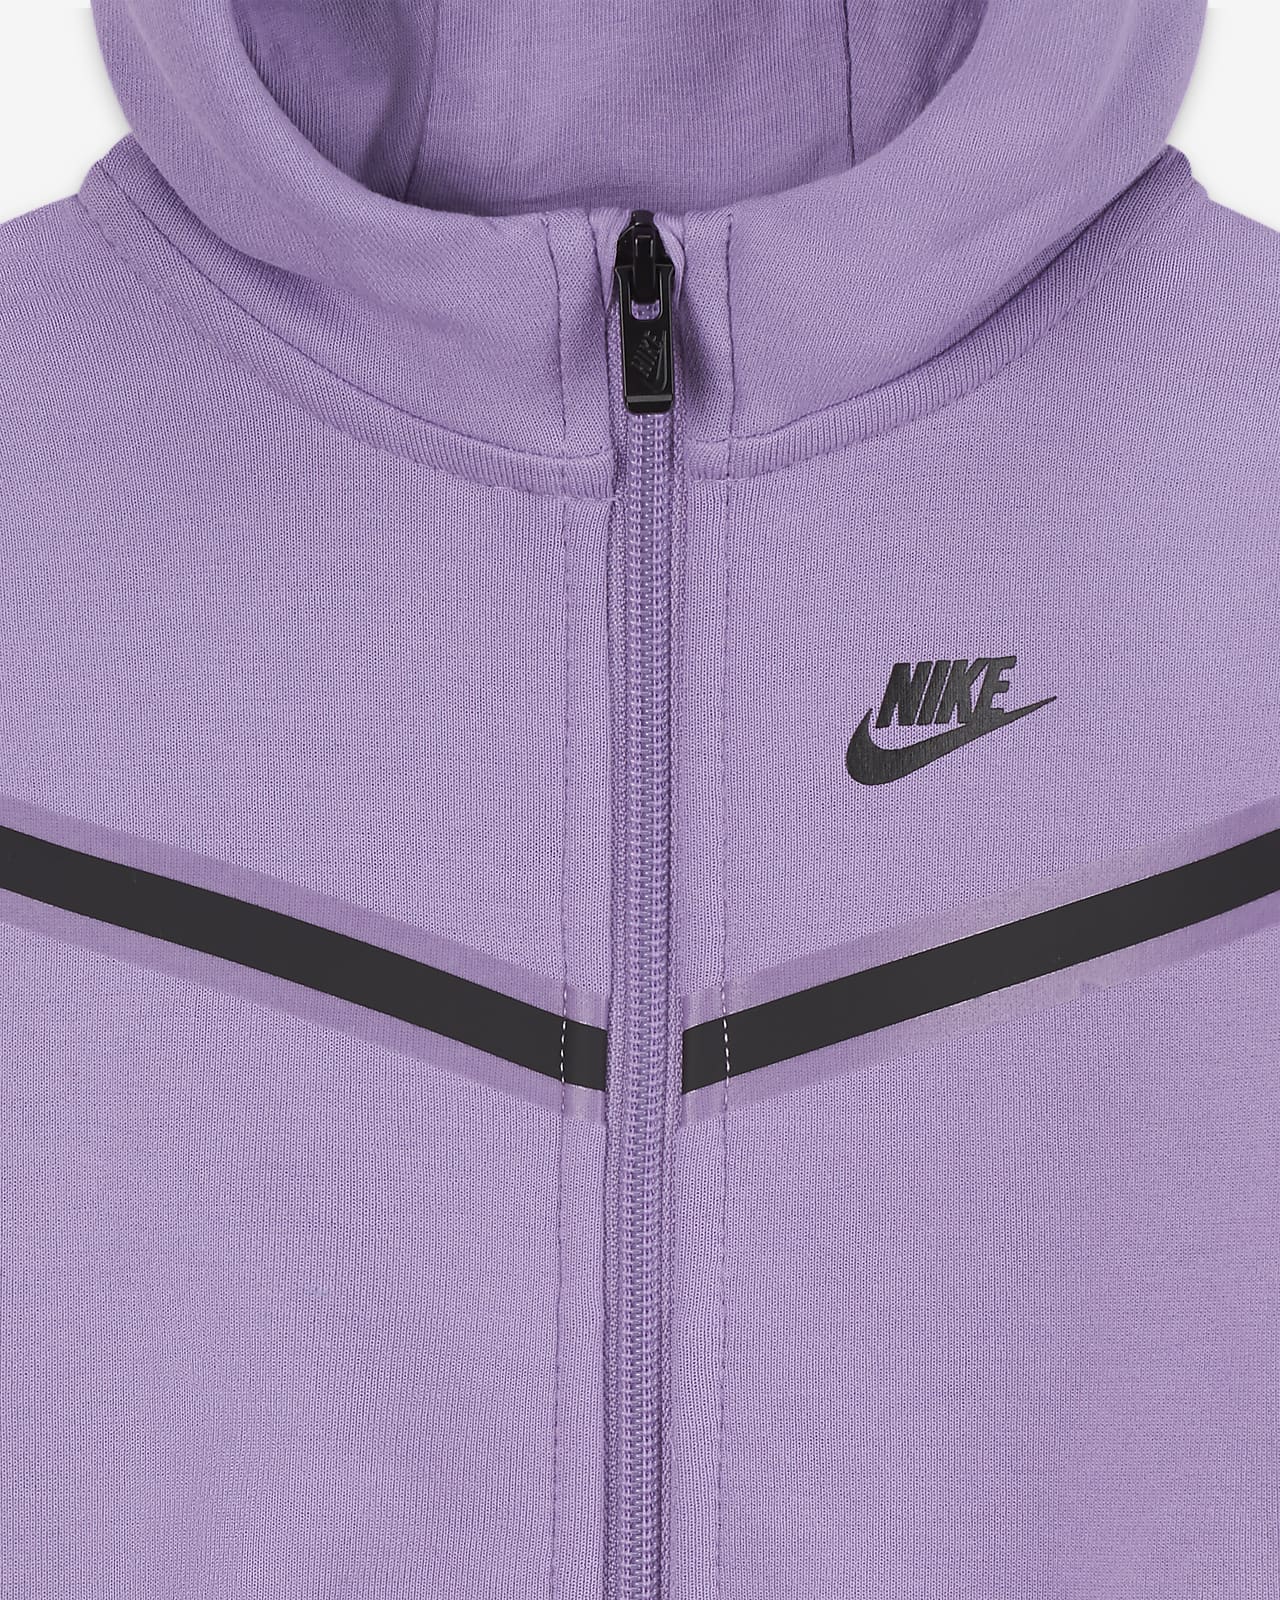 nike fleece purple